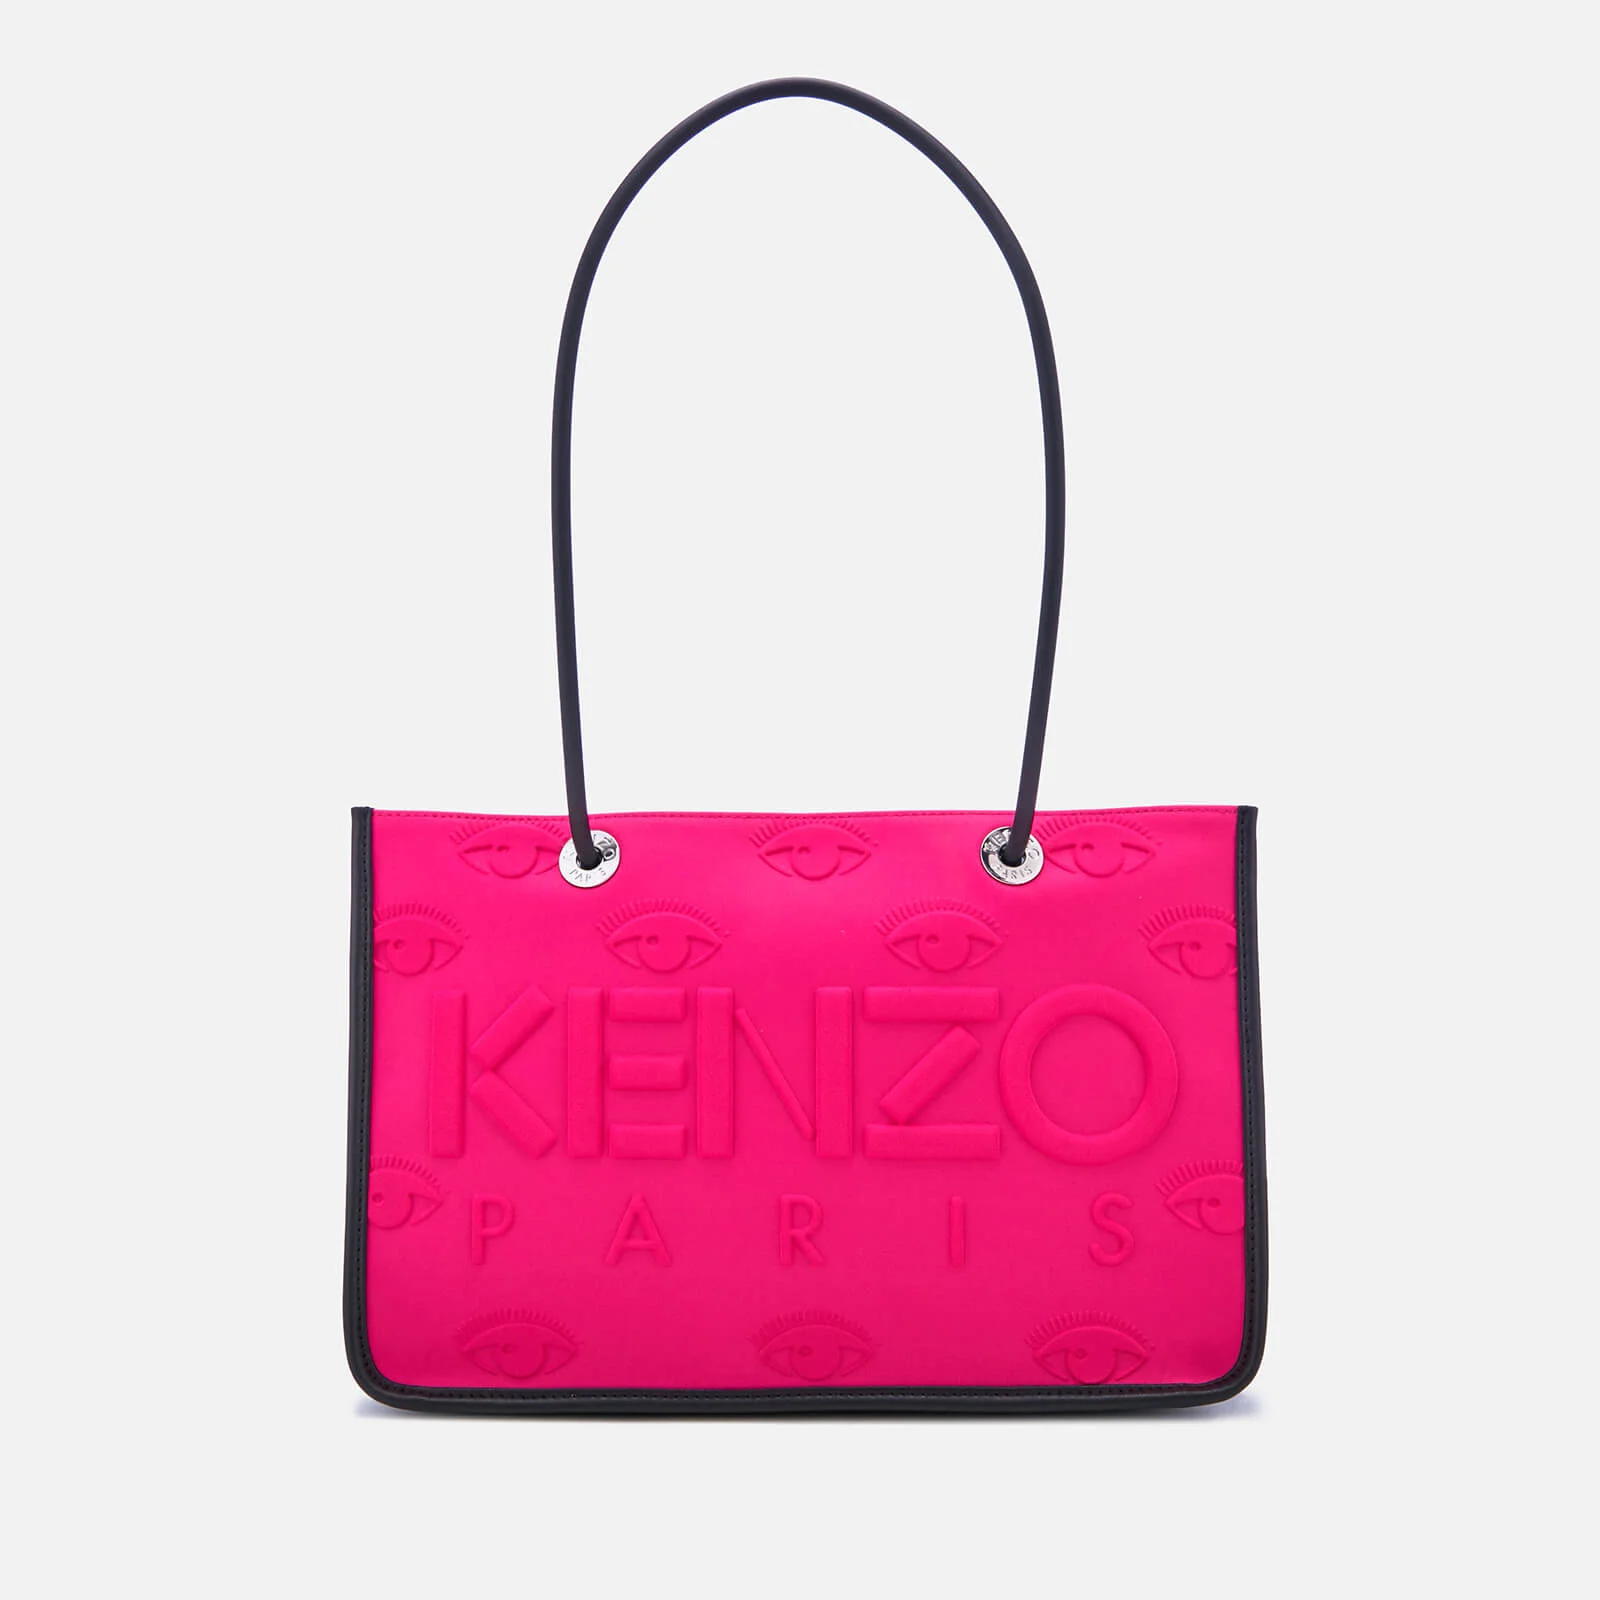 KENZO Women's Neoprene Tote Bag - Deep Fuchsia Image 1